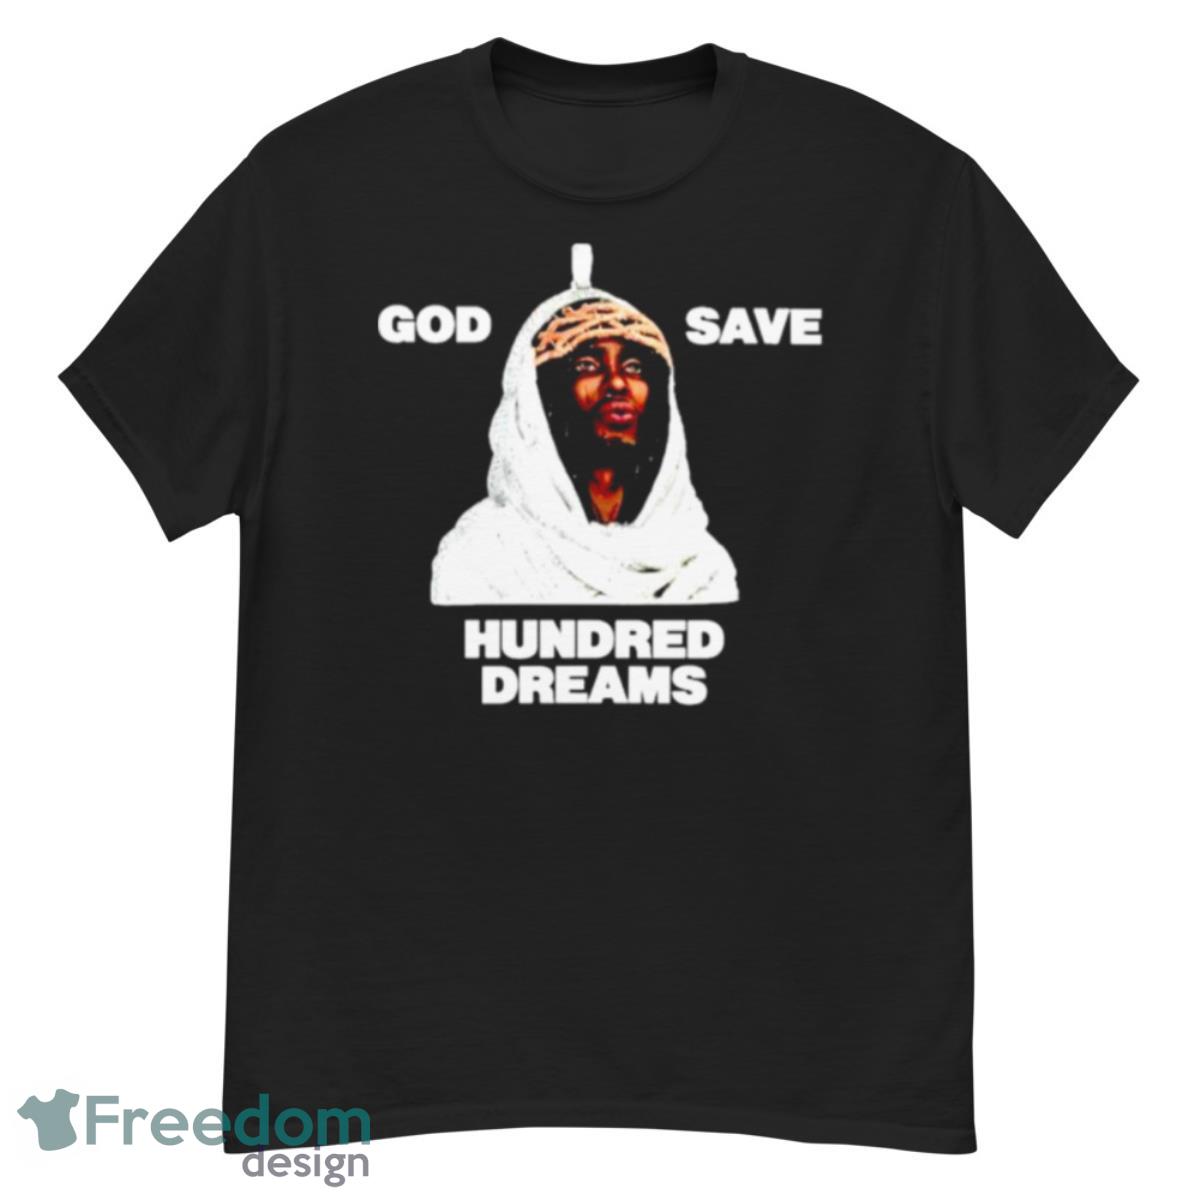 God save hundred dreams shirt - G500 Men’s Classic T-Shirt